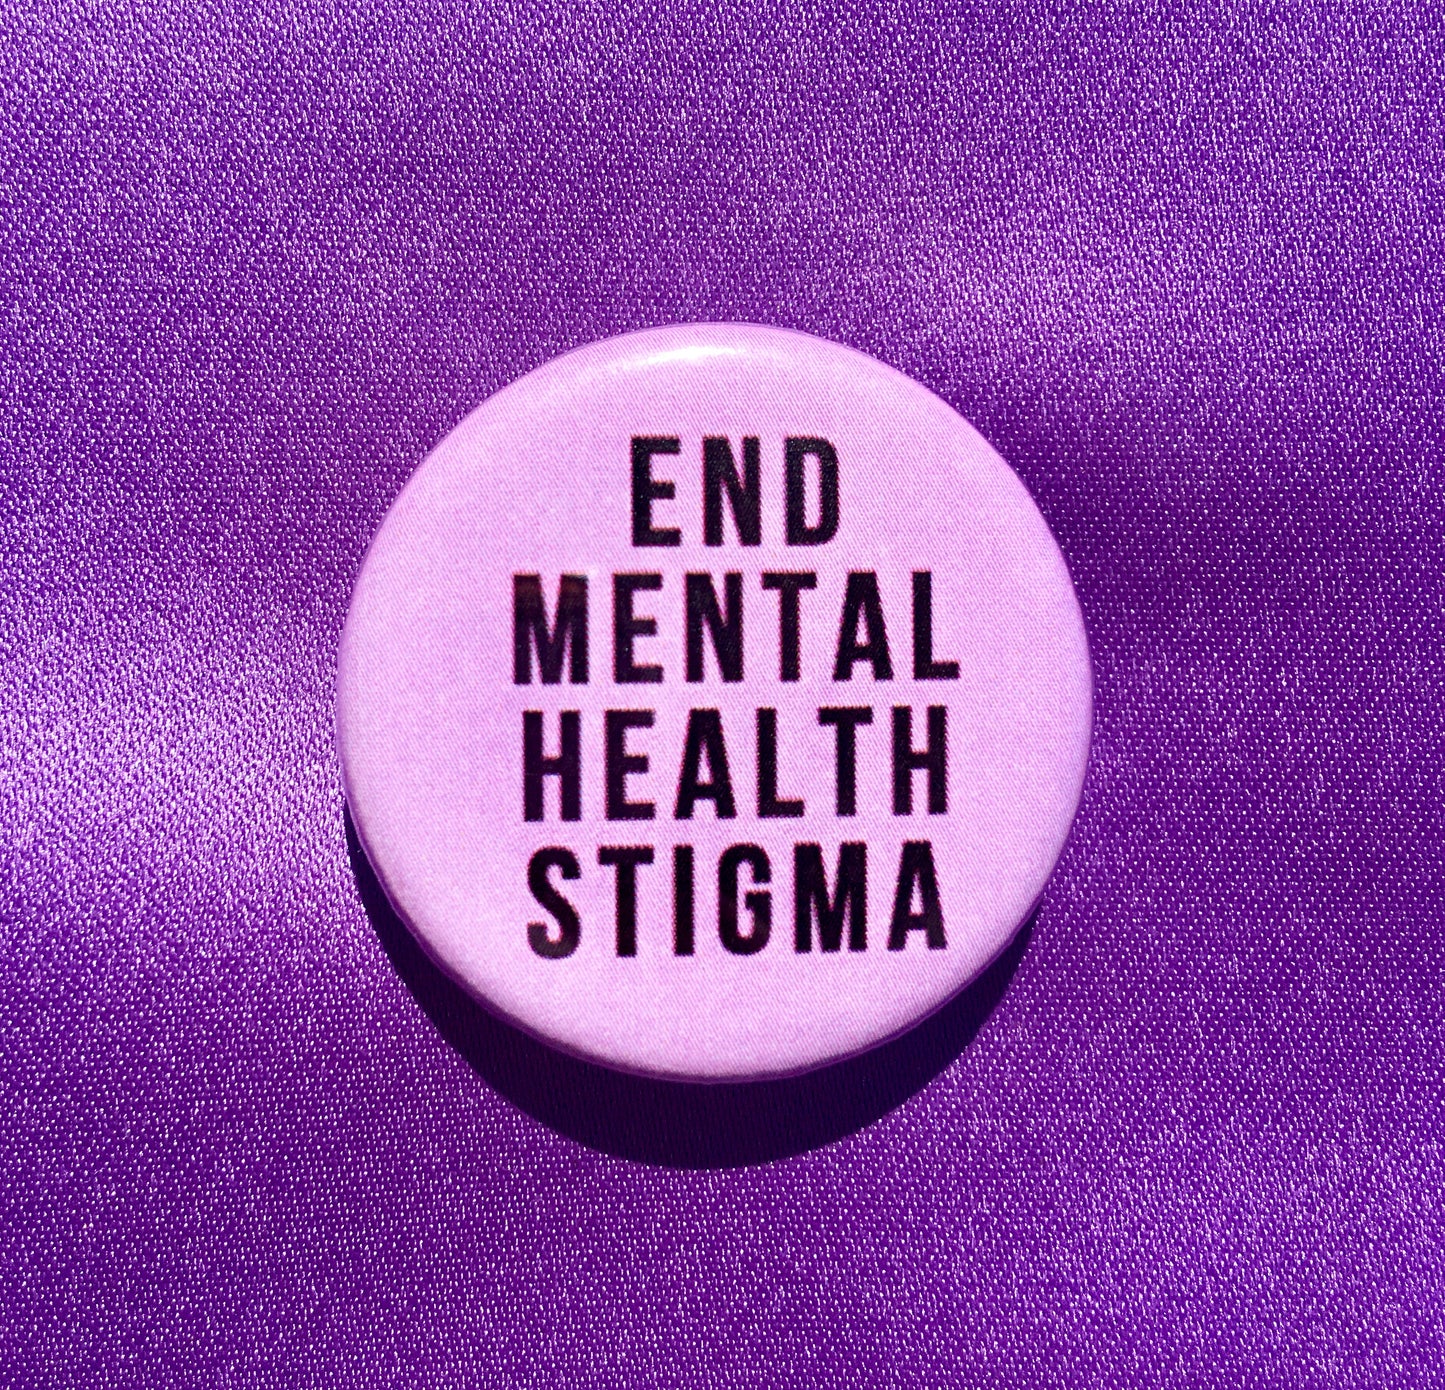 End mental health stigma - Radical Buttons